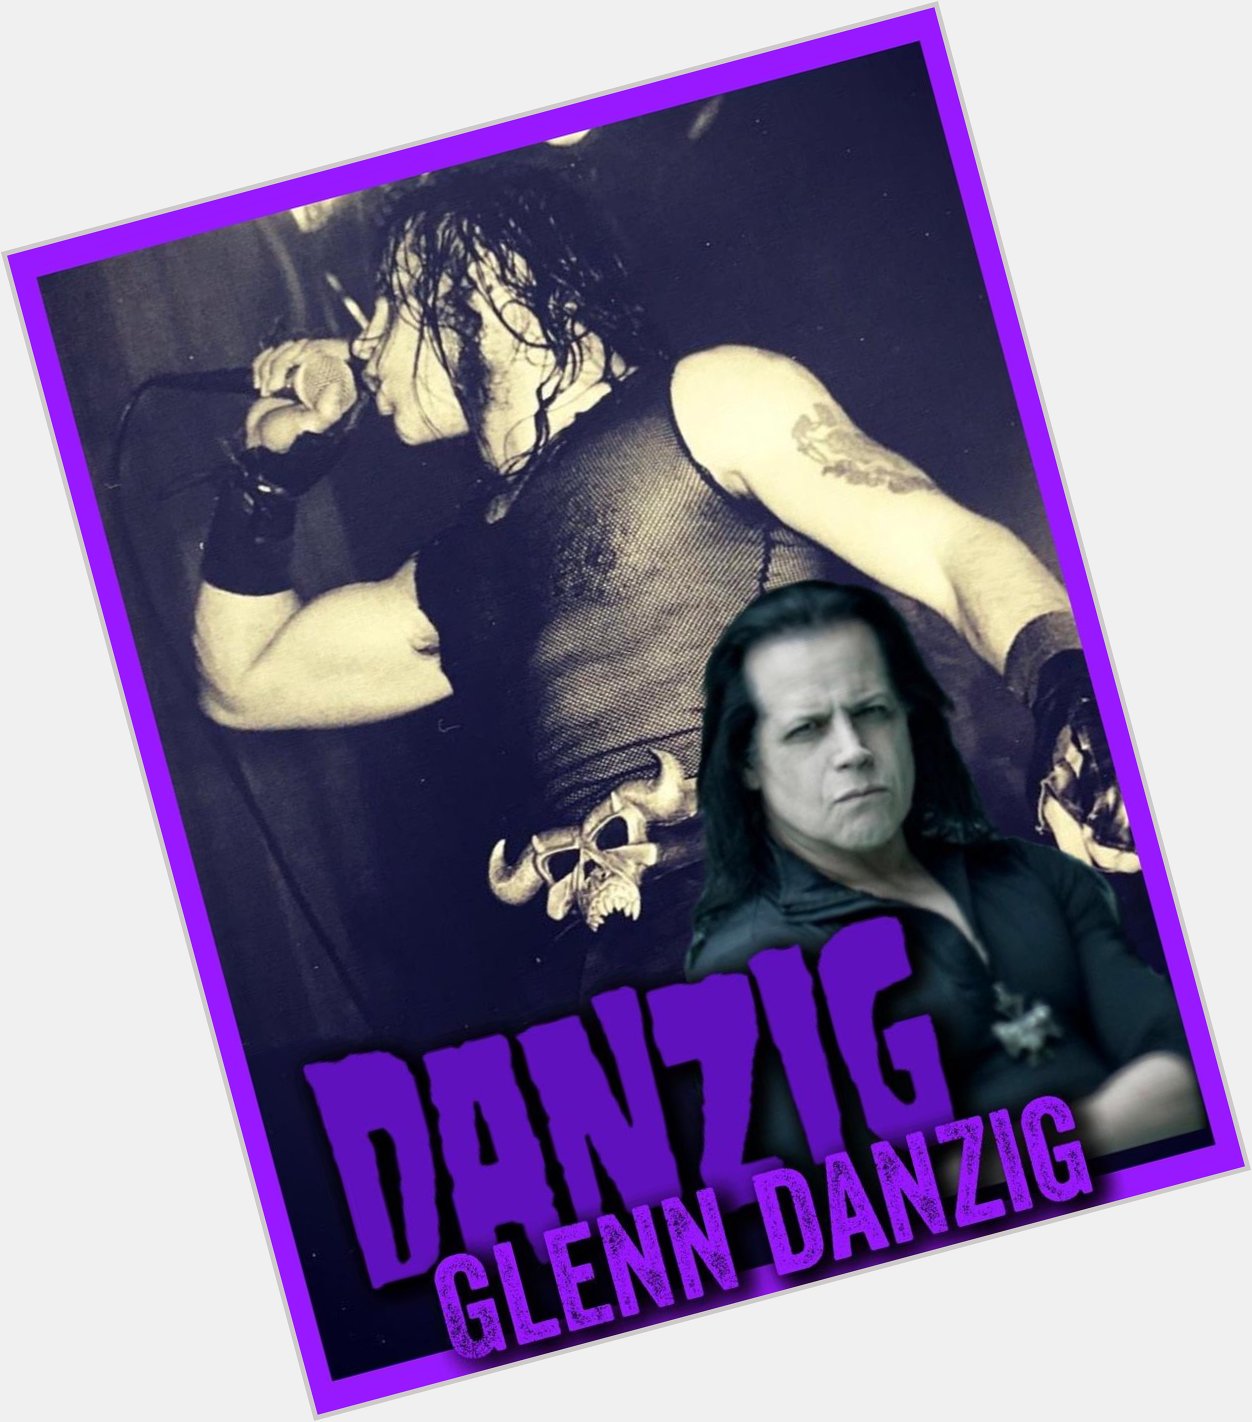 Happy Birthday Glenn Danzig
Lead singer Misfits & Danzig
June 23, 1955 Lodi, New Jersey 